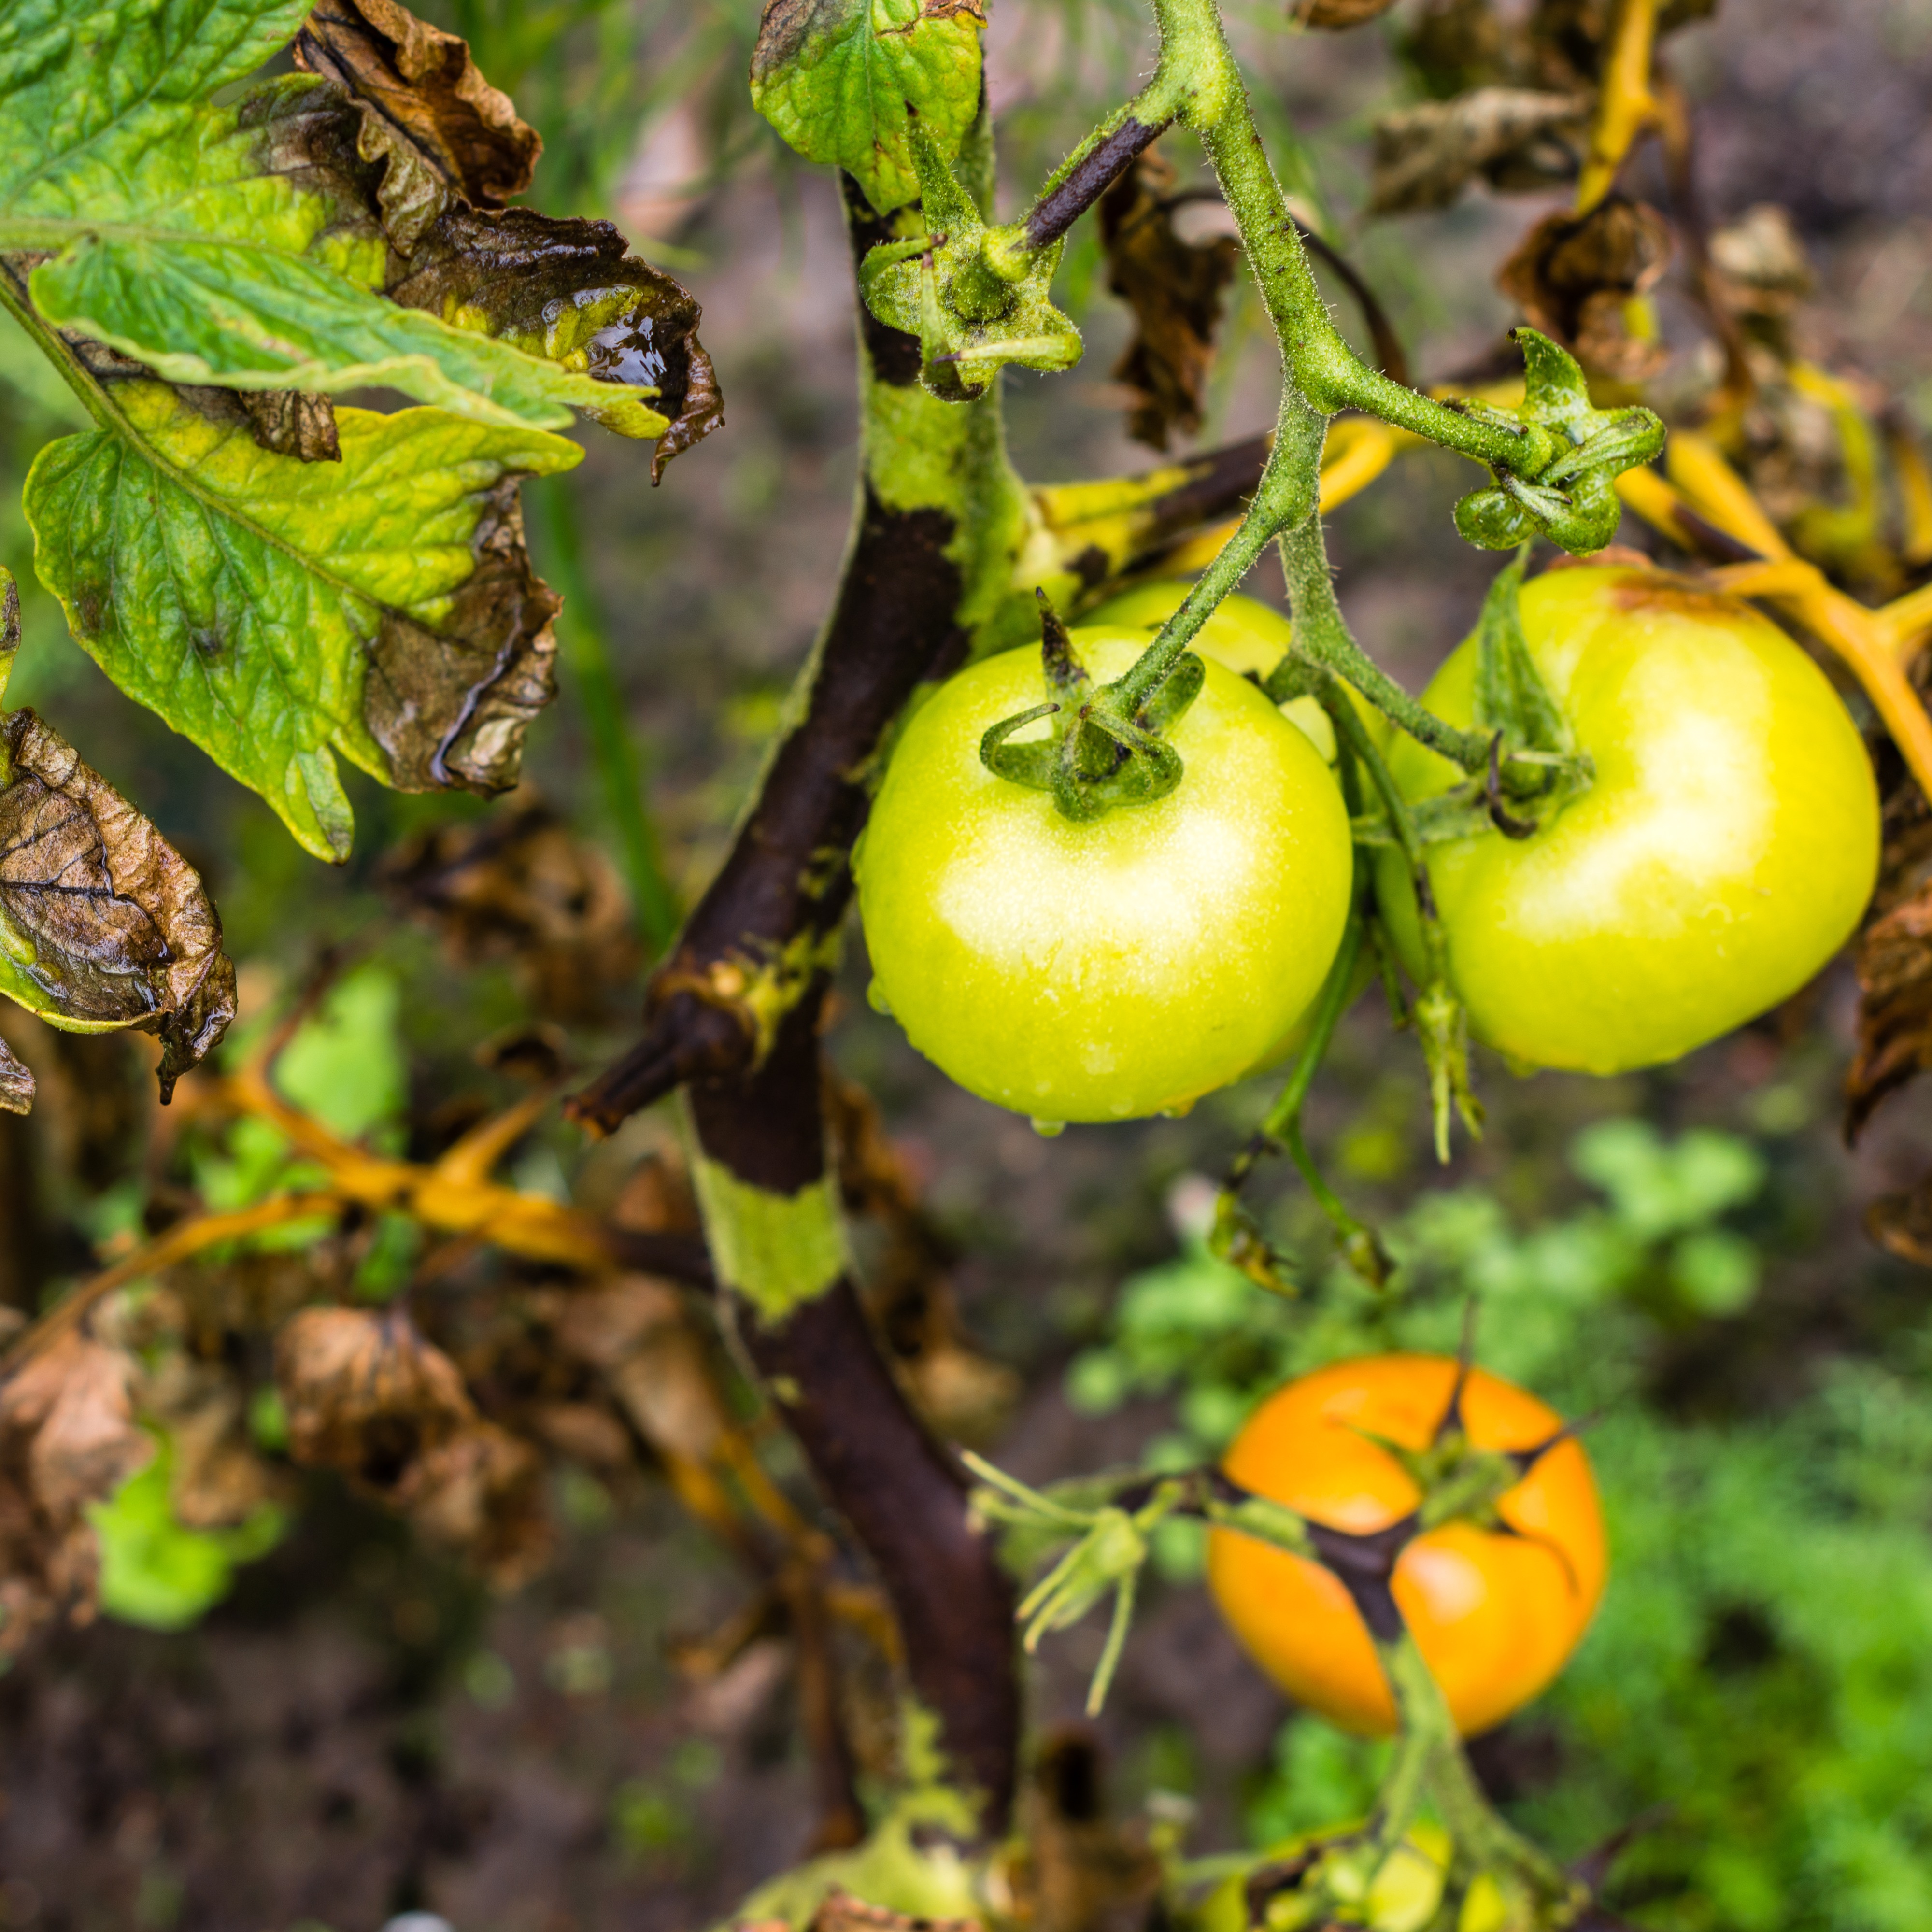 Image de tomates atteintes de mildiou - Aveve